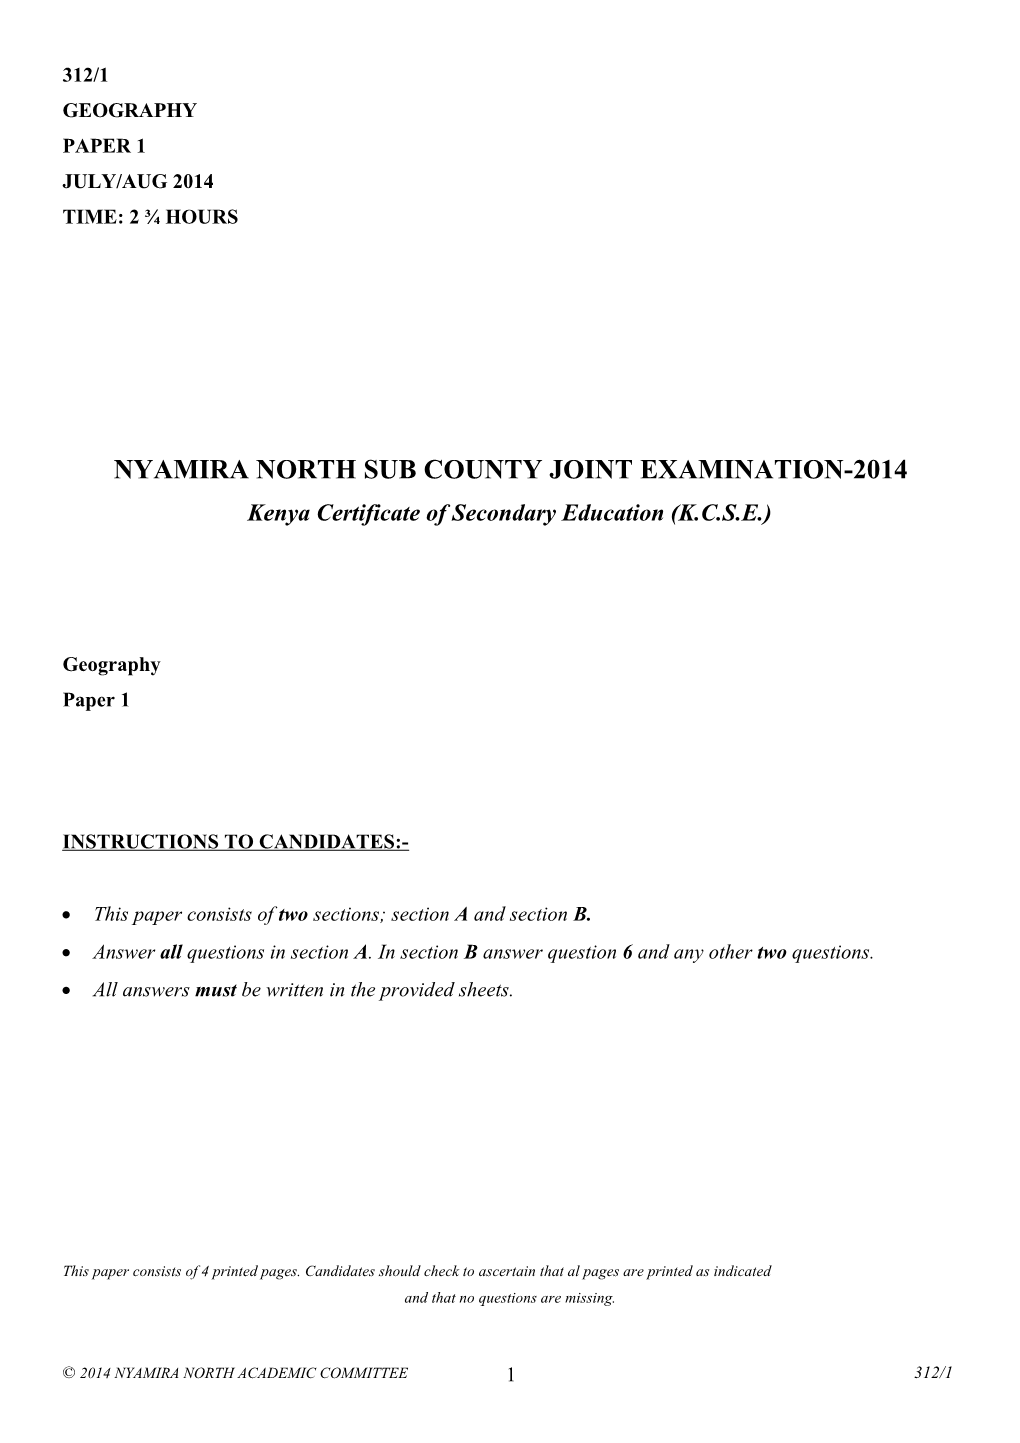 NYAMIRA NORTH SUB COUNTY JOINT EXAMINATION-2014 Kenya Certificate of Secondary Education